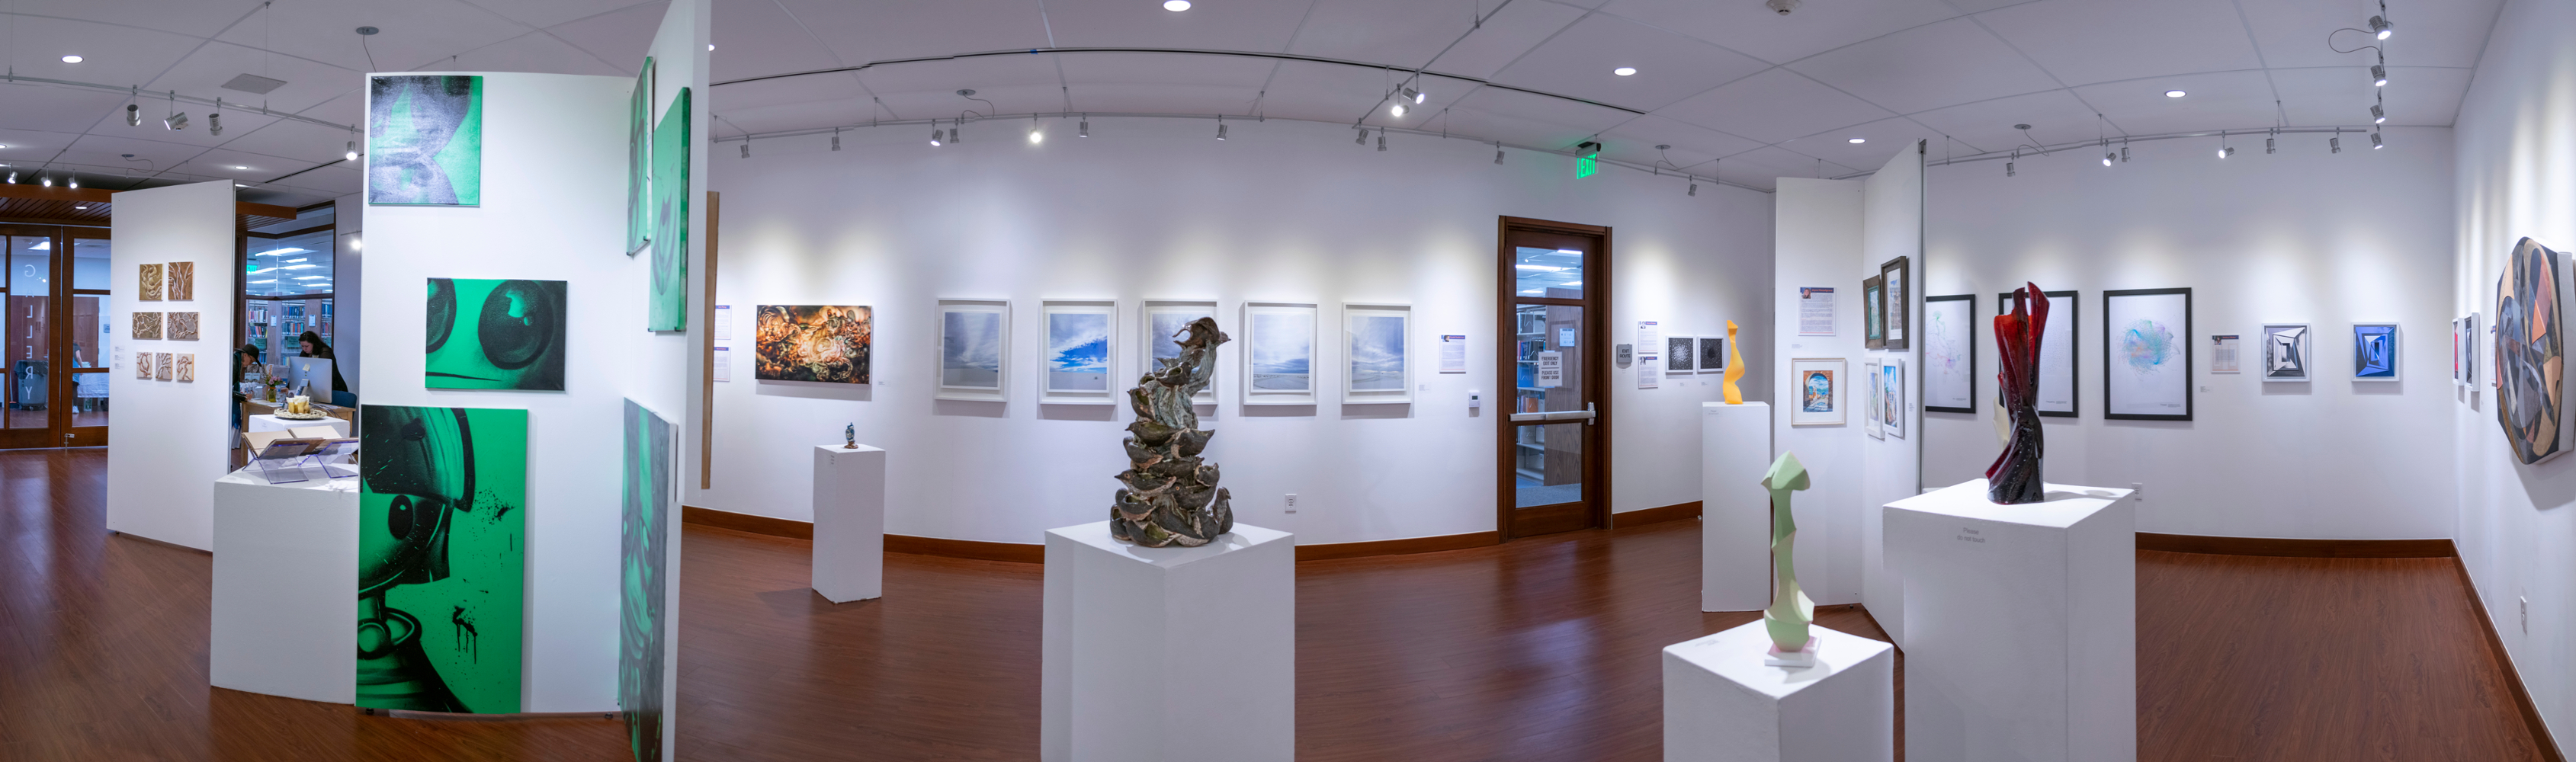 installations around center of gallery